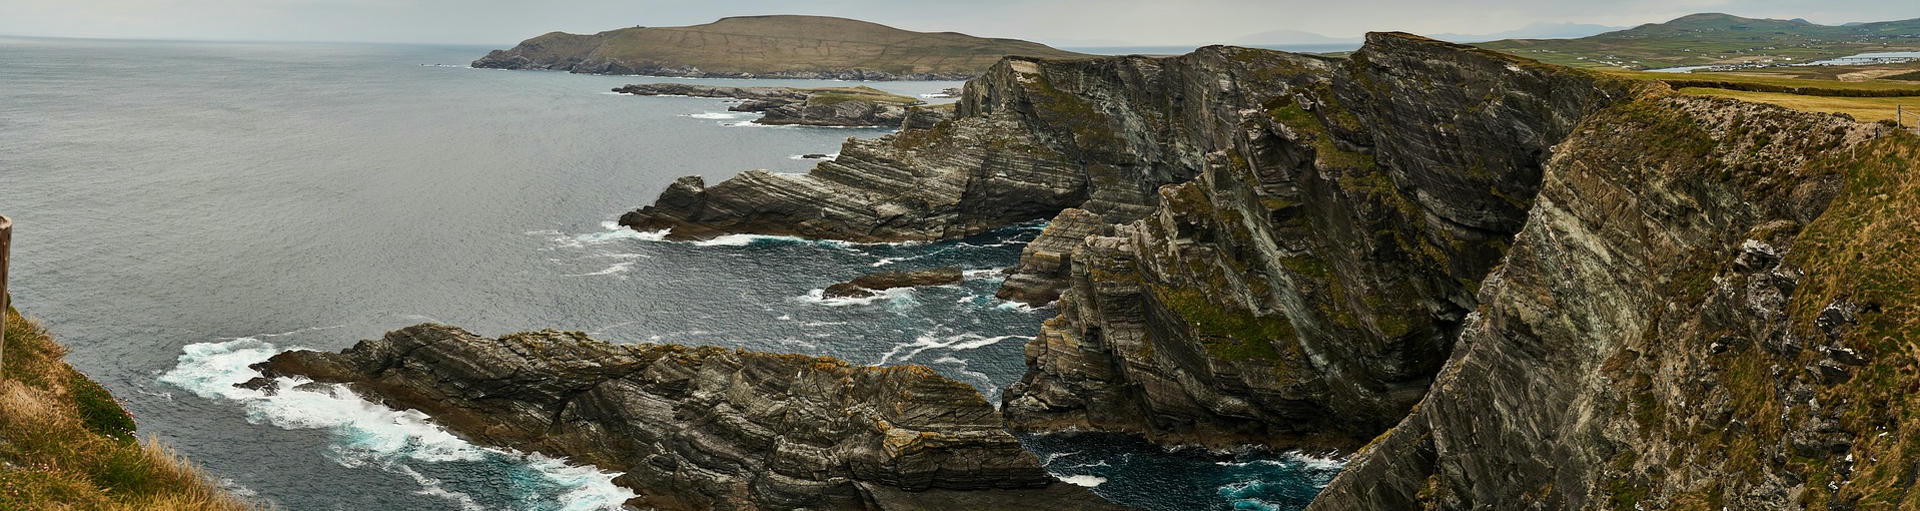 Schroffe Felsen und raues Meer am Ring of Kerry in Irland